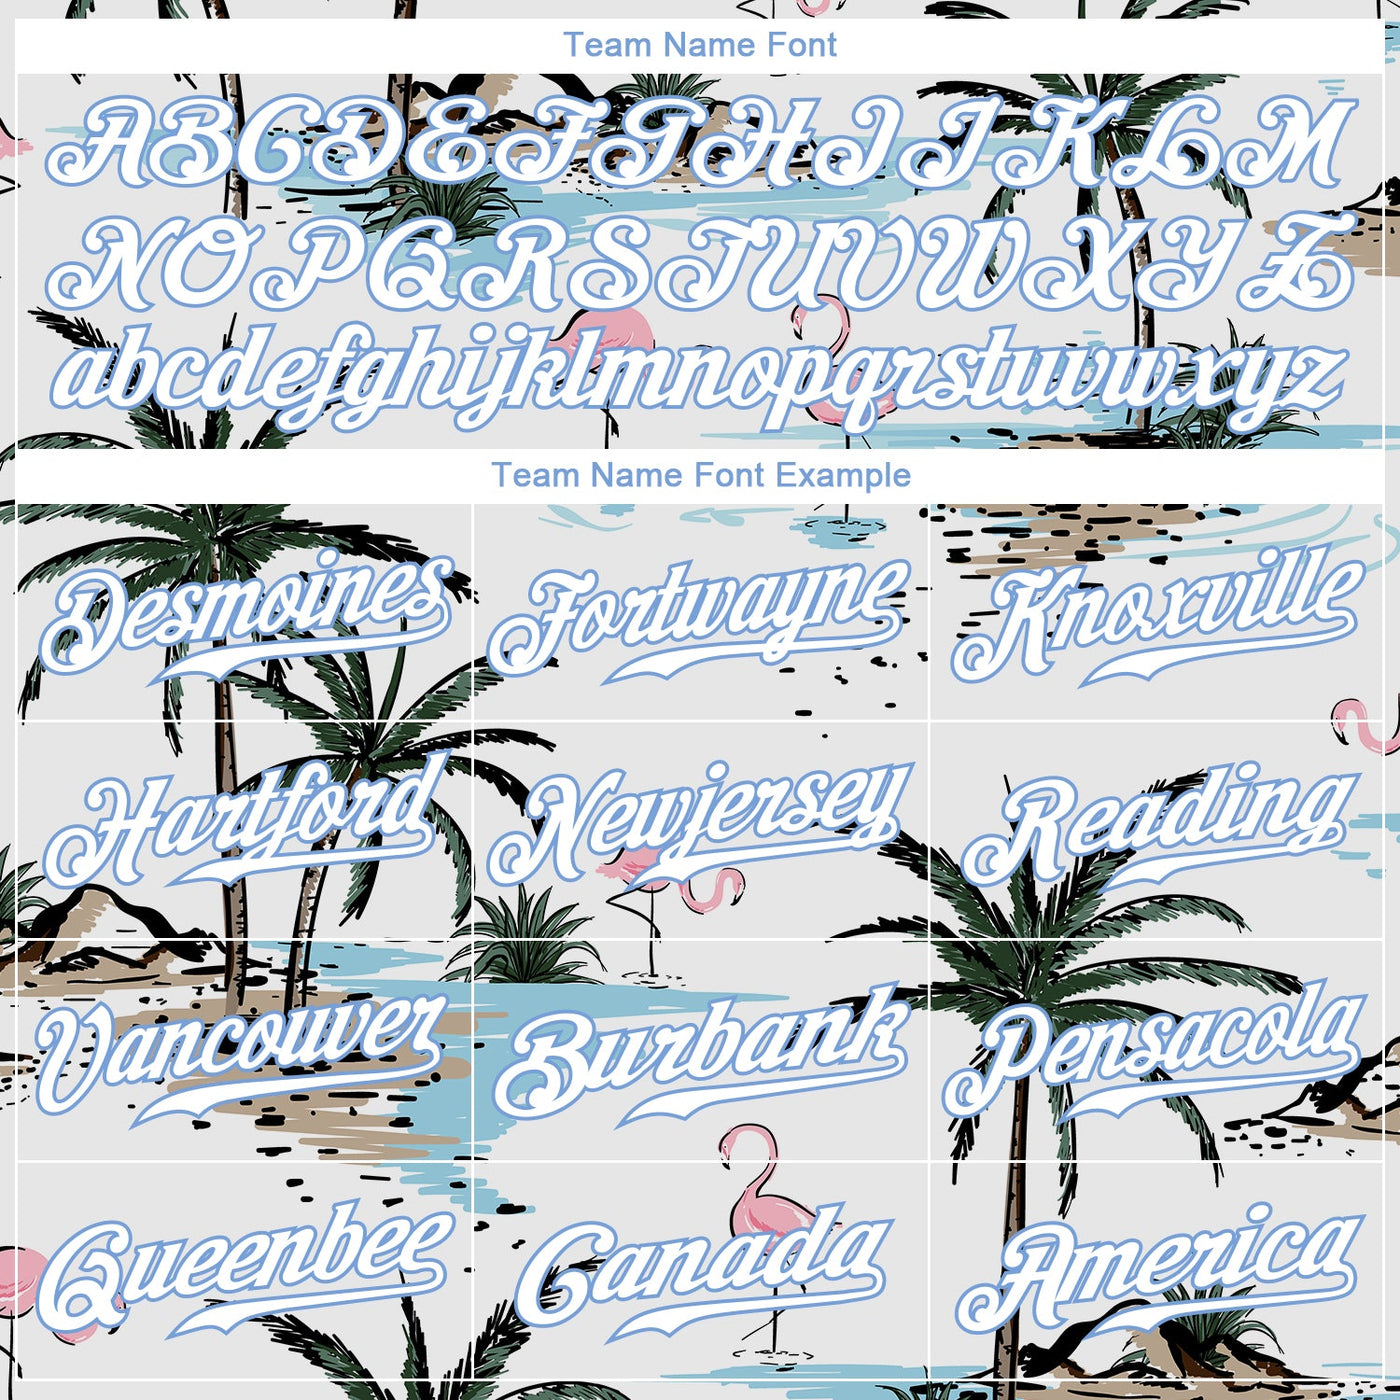 Custom White White-Light Blue 3D Pattern Design Hawaii Palm Trees Authentic Baseball Jersey - Owls Matrix LTD